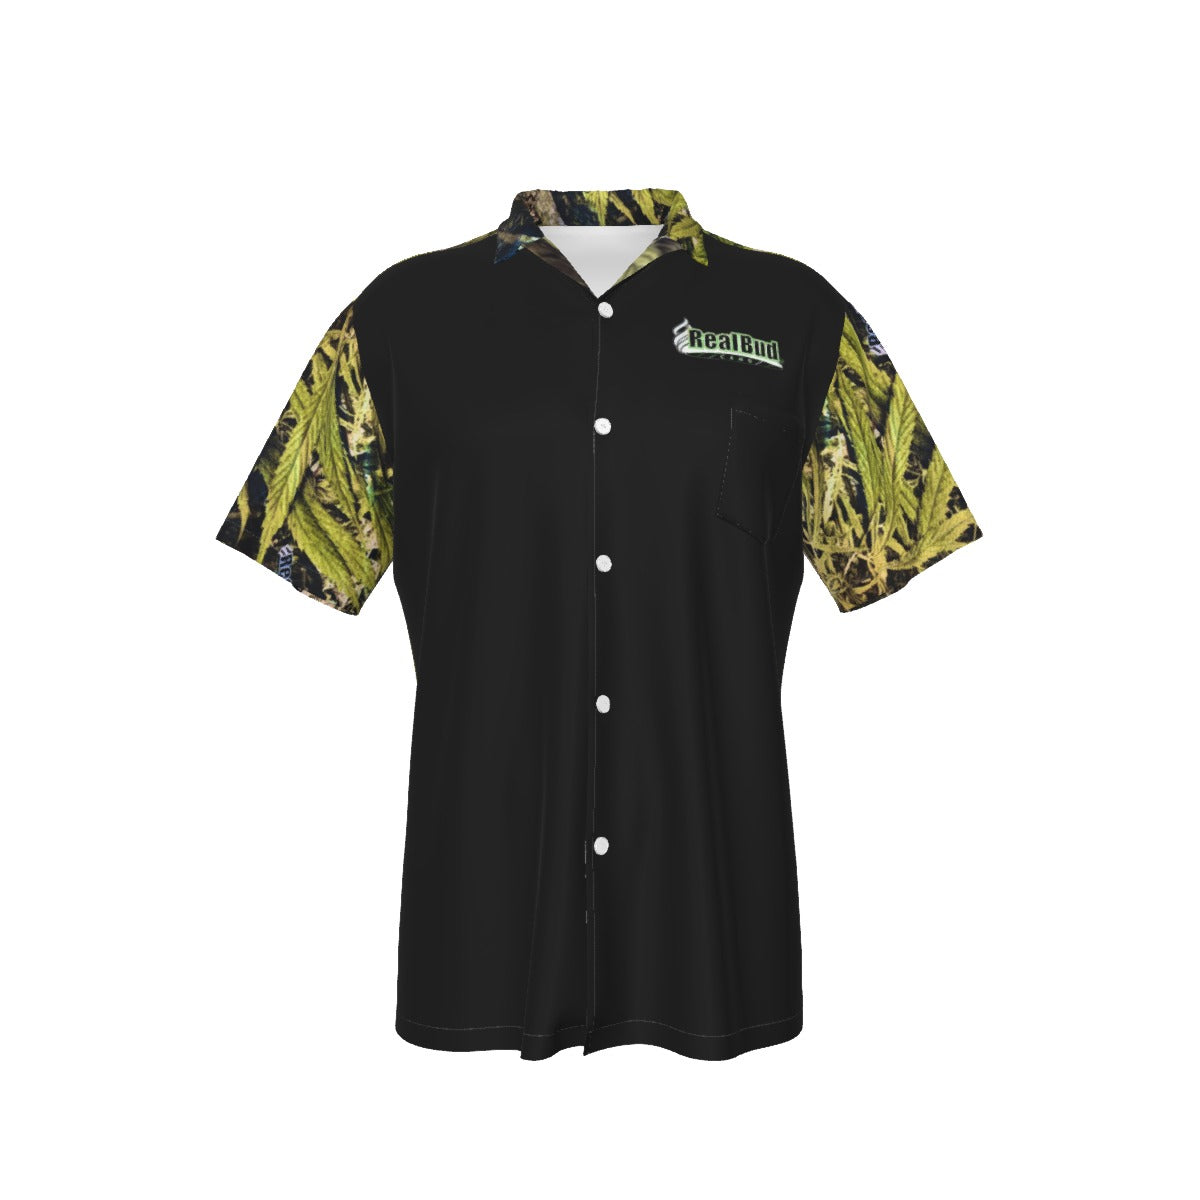 All-over Print Pocket Hawaiian Shirt - Print On Demand